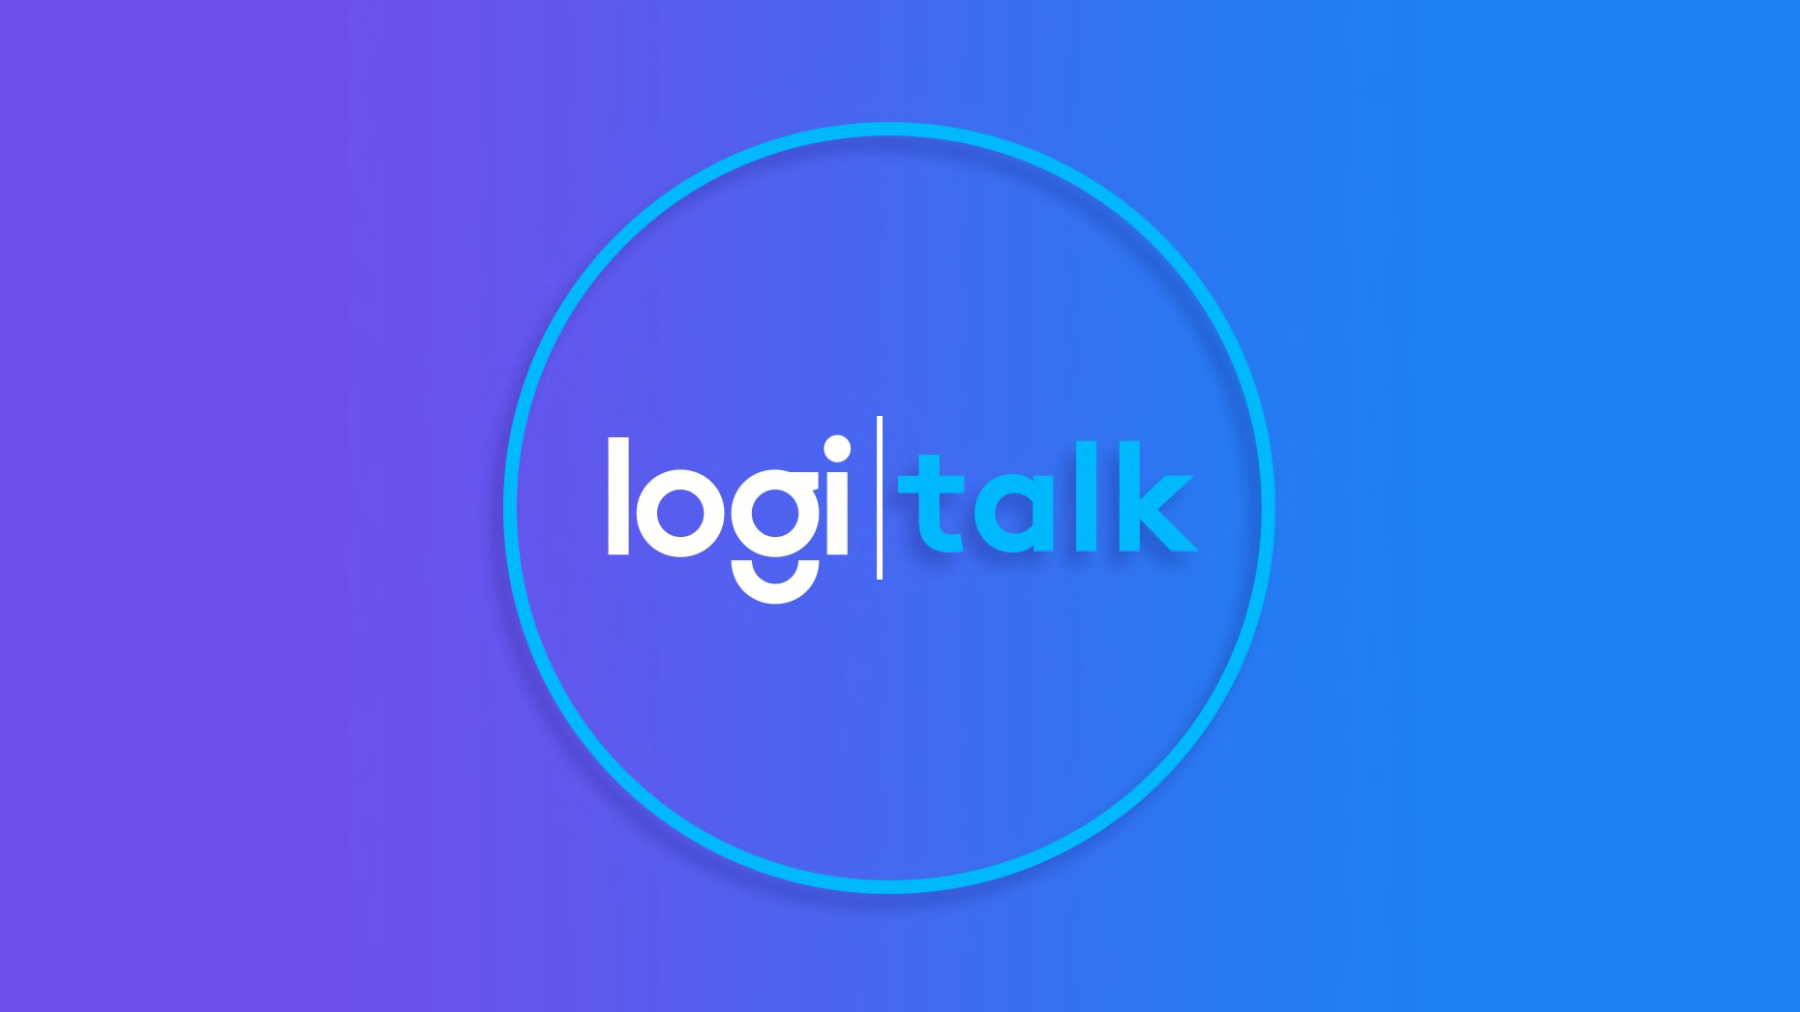 Logi talk logo